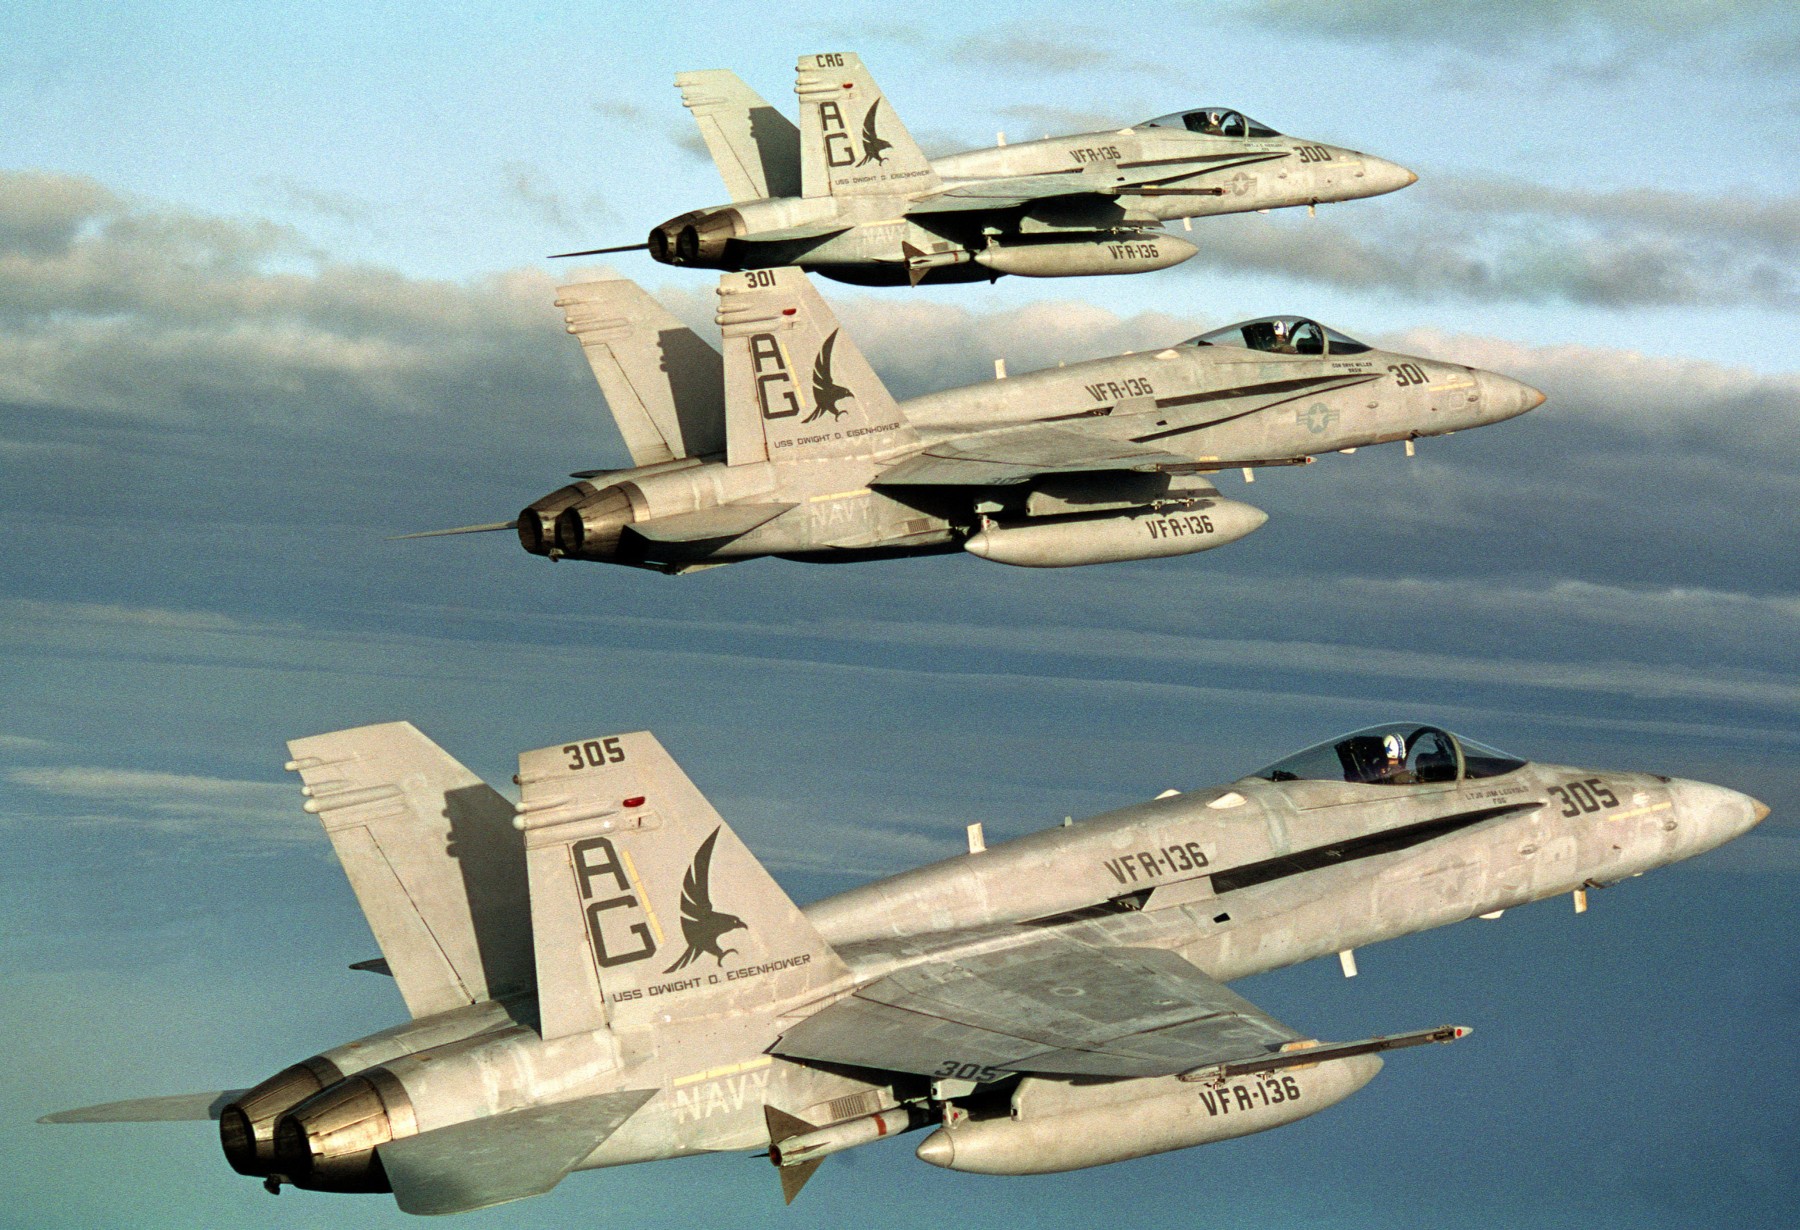 vfa-136 knighthawks strike fighter squadron f/a-18c hornet 1992 85 cvw-7 uss dwight d. eisenhower cvn-69